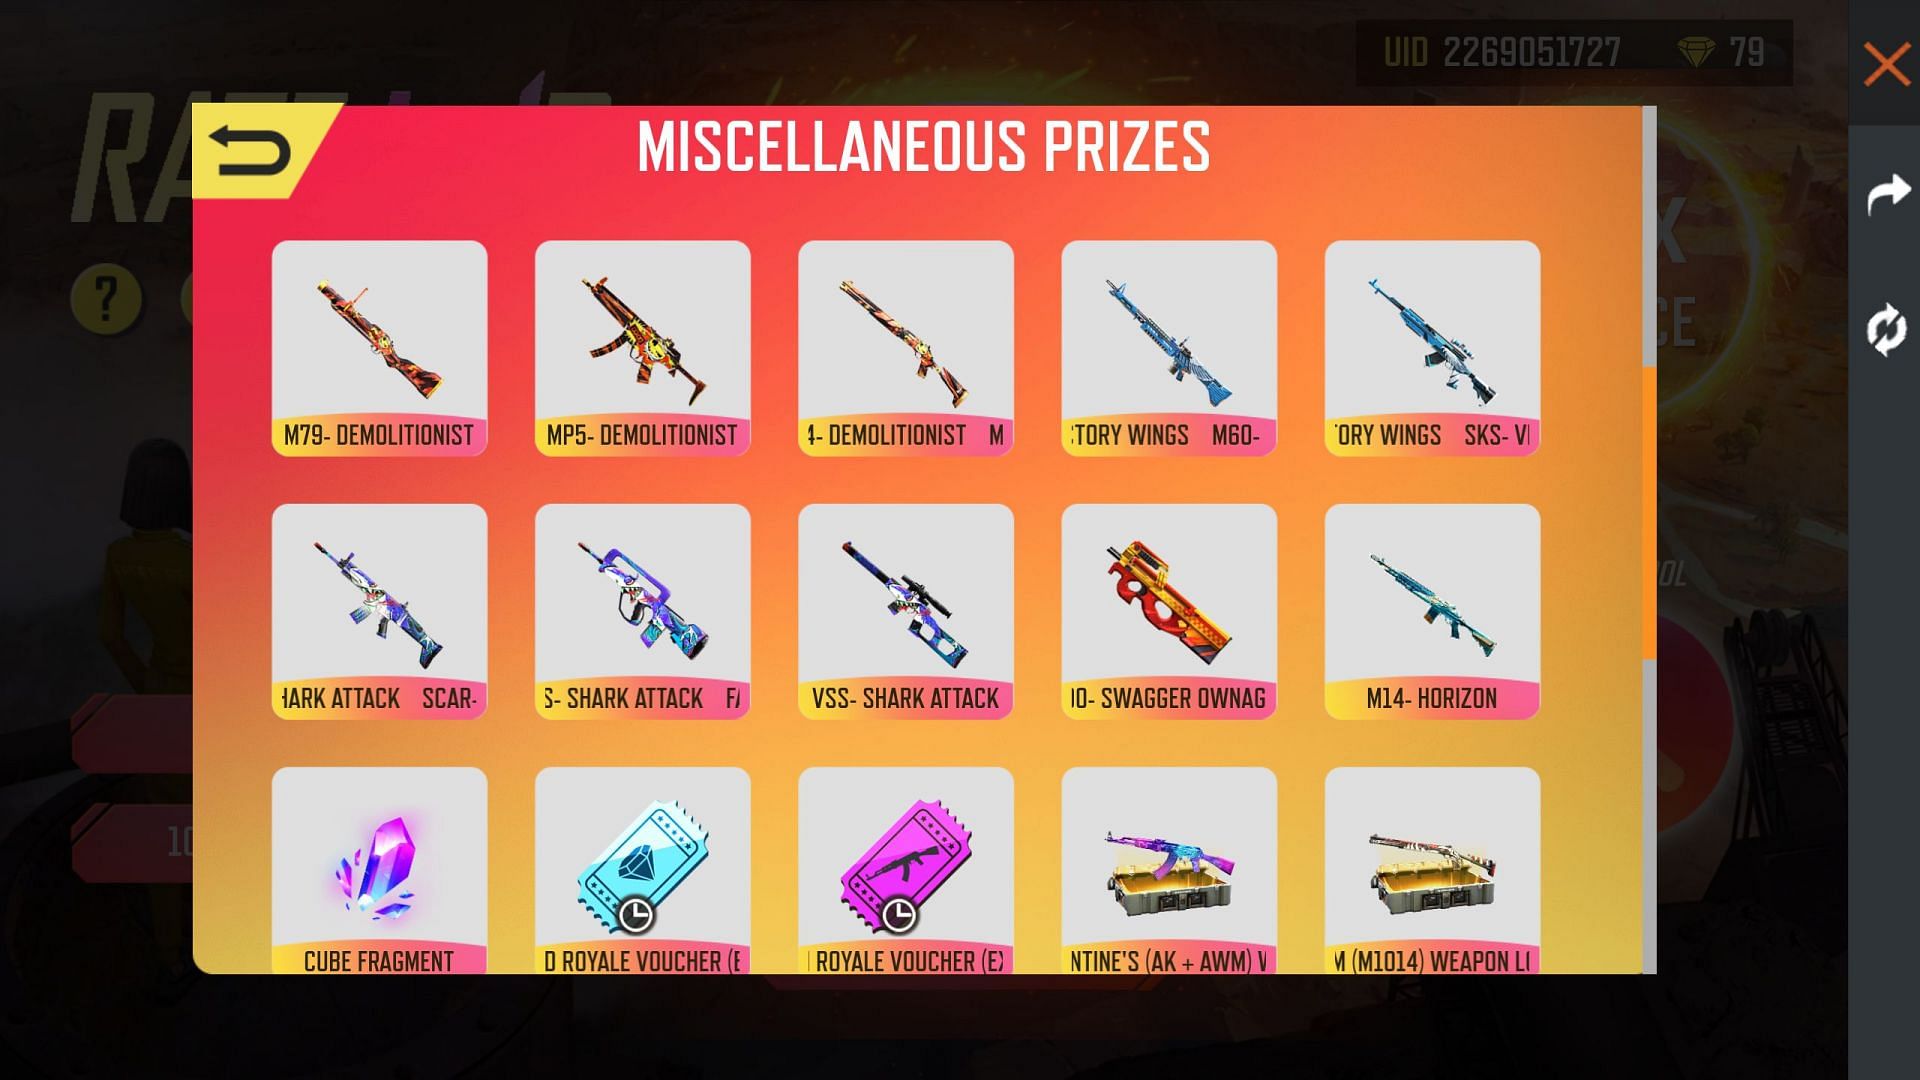 The other miscellaneous prizes (Image via Garena)